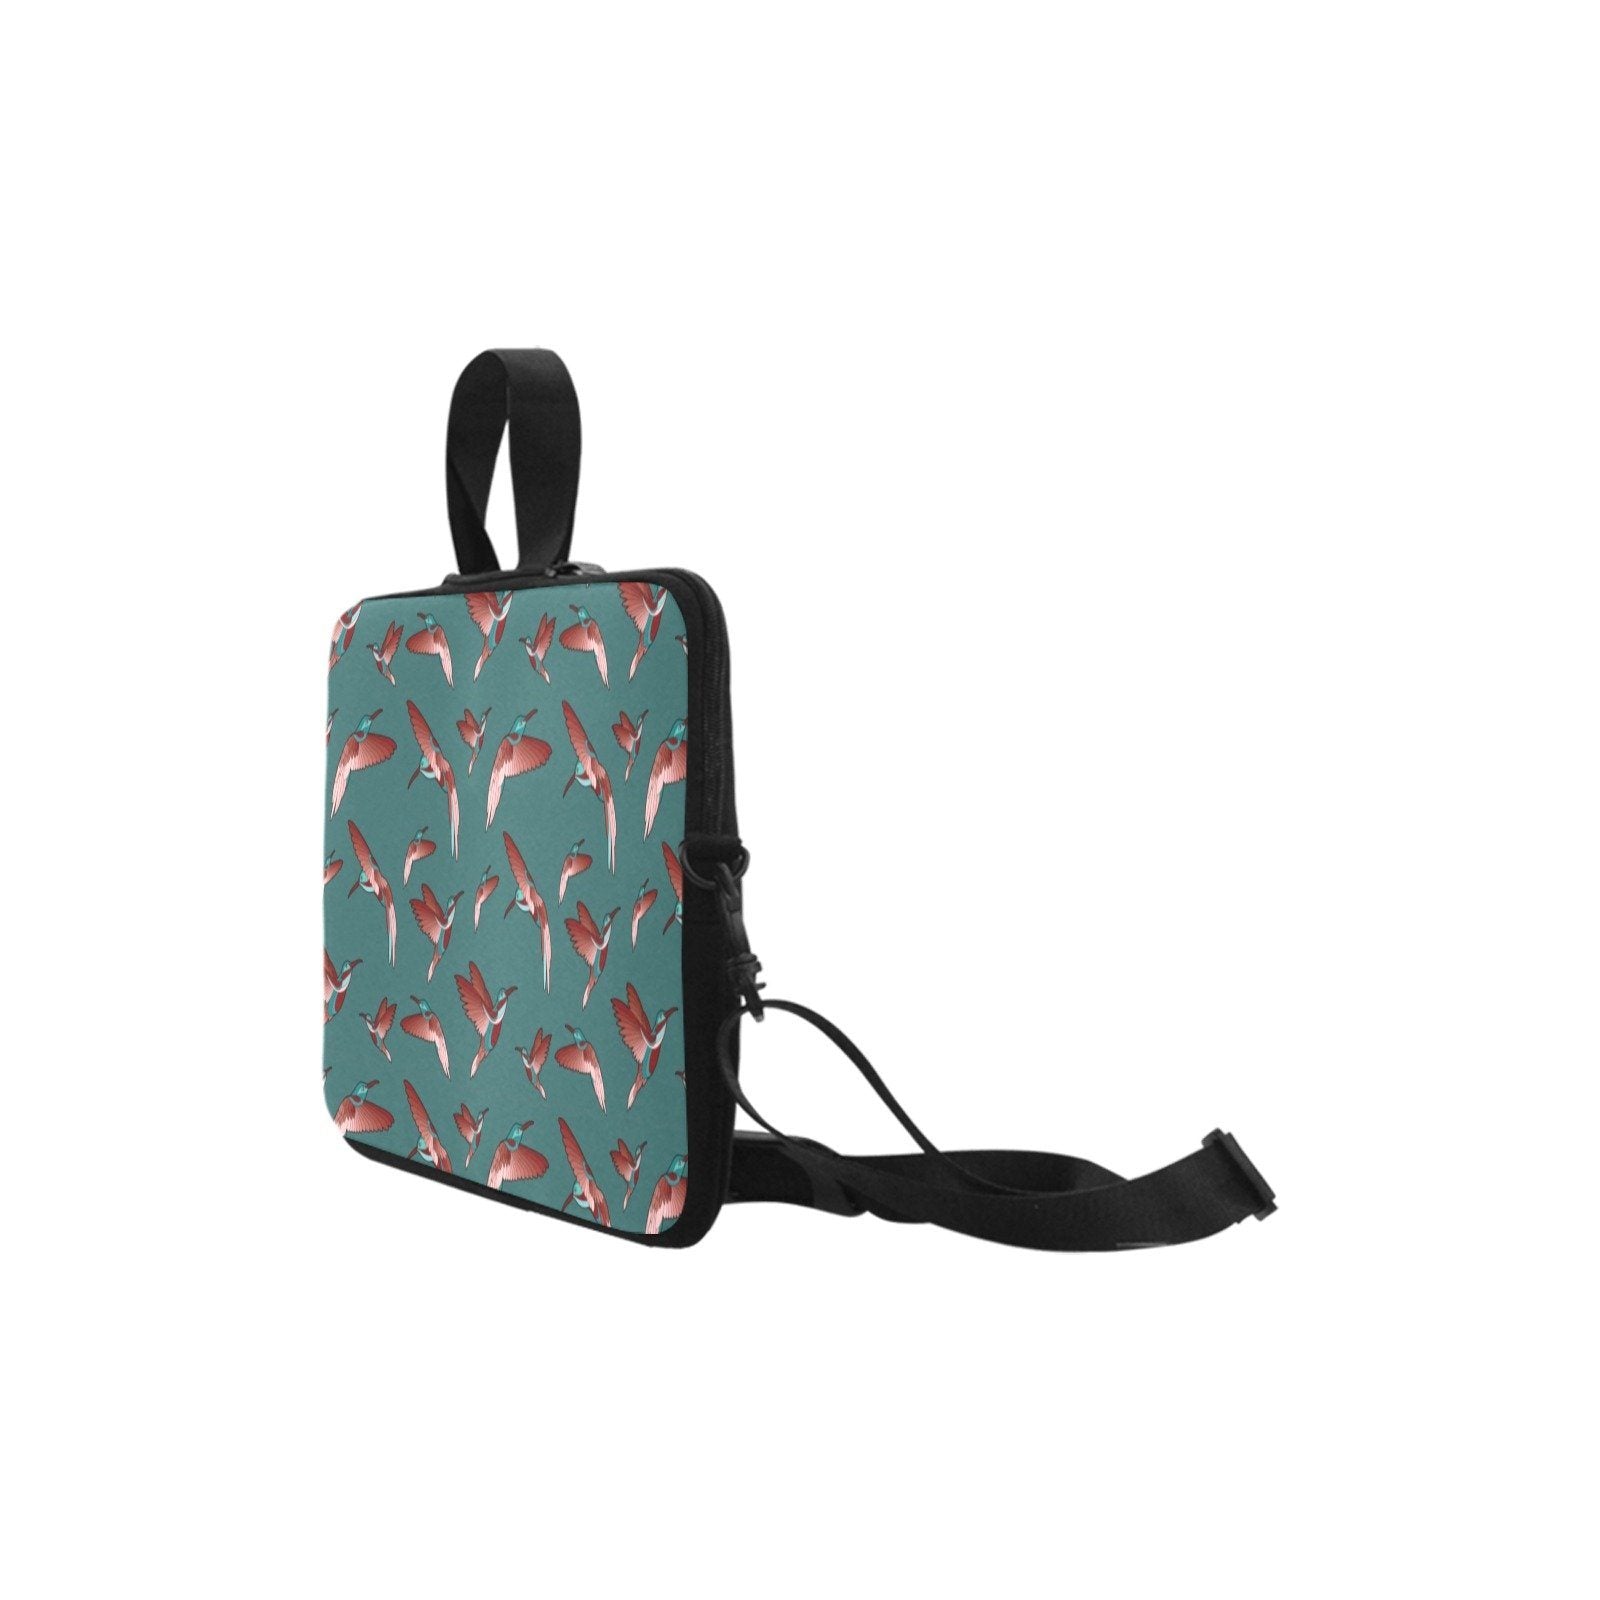 Red Swift Turquoise Laptop Handbags 15" Laptop Handbags 15" e-joyer 